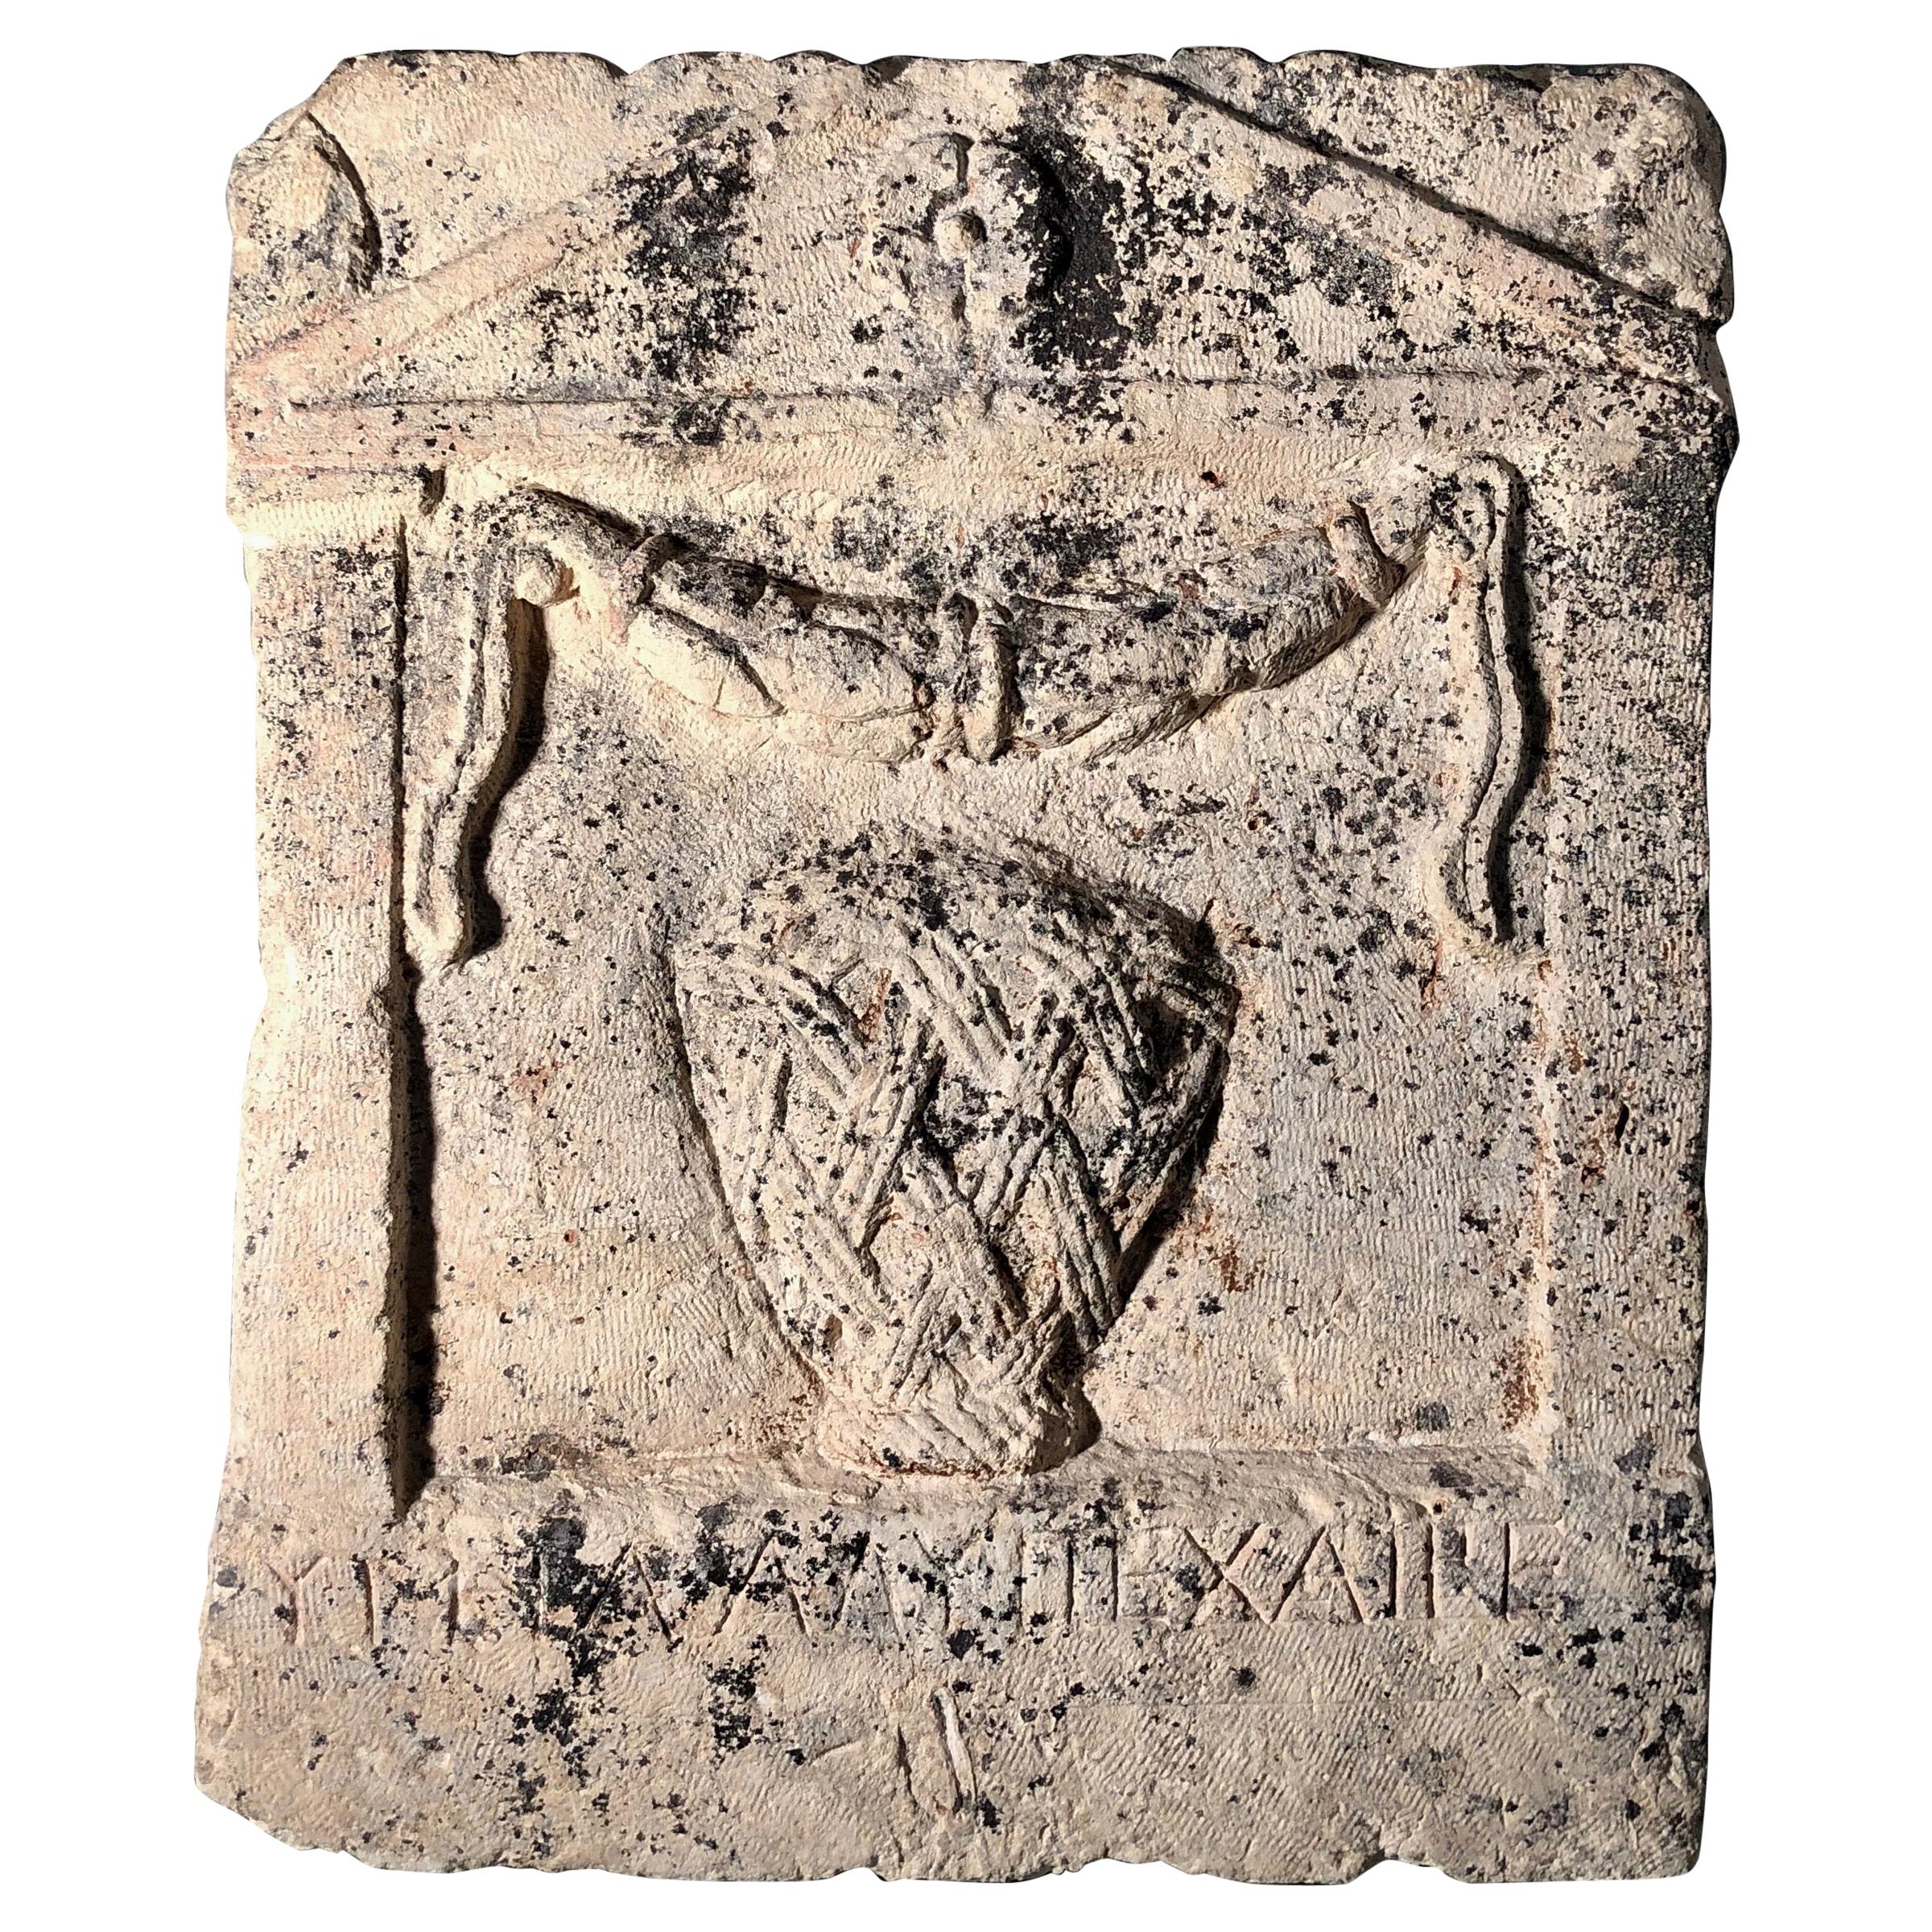 Inscribed Roman naiskos type stele, 1st century AD For Sale